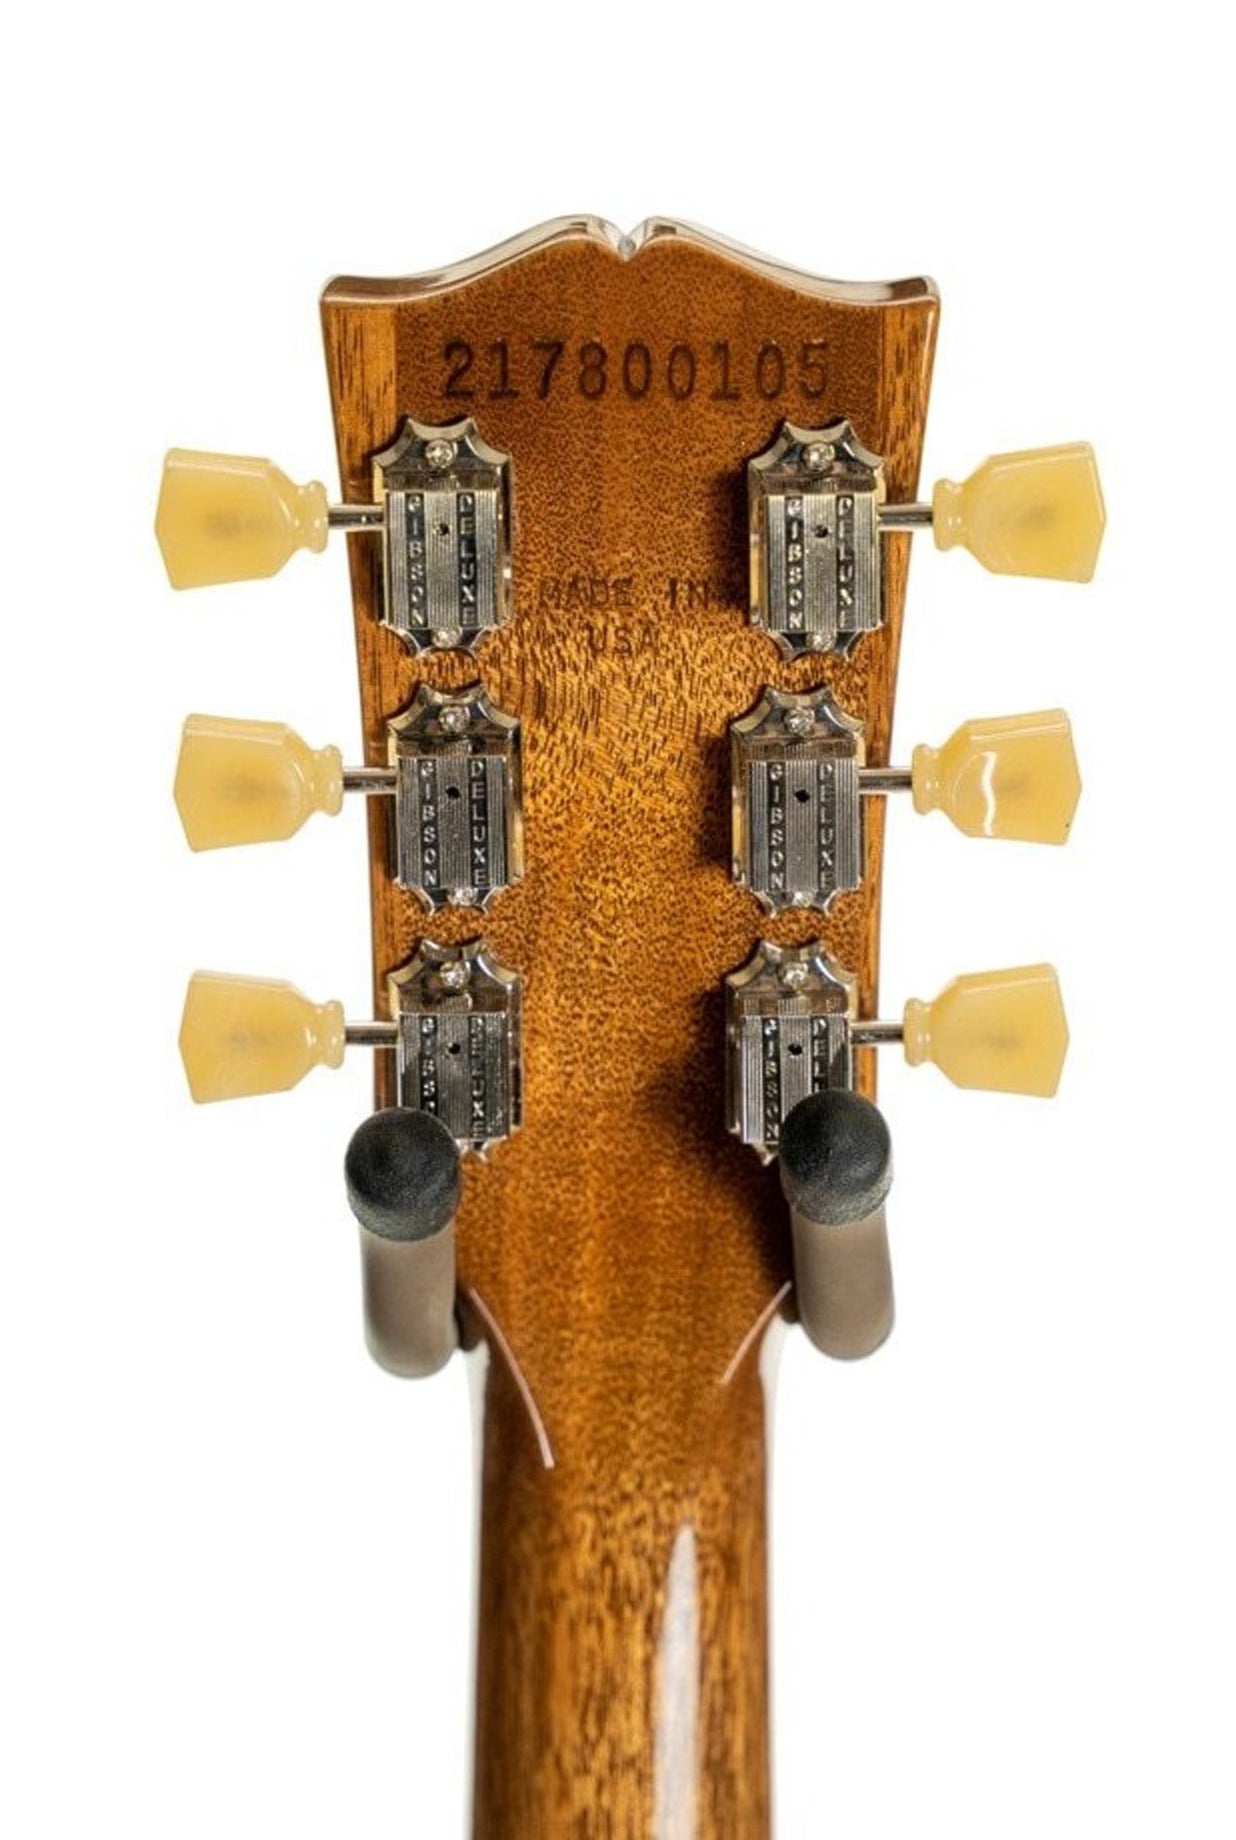 Gibson Les Paul Standard 50s LPS5P00GTNH1 Electric Guitar - Gold Top